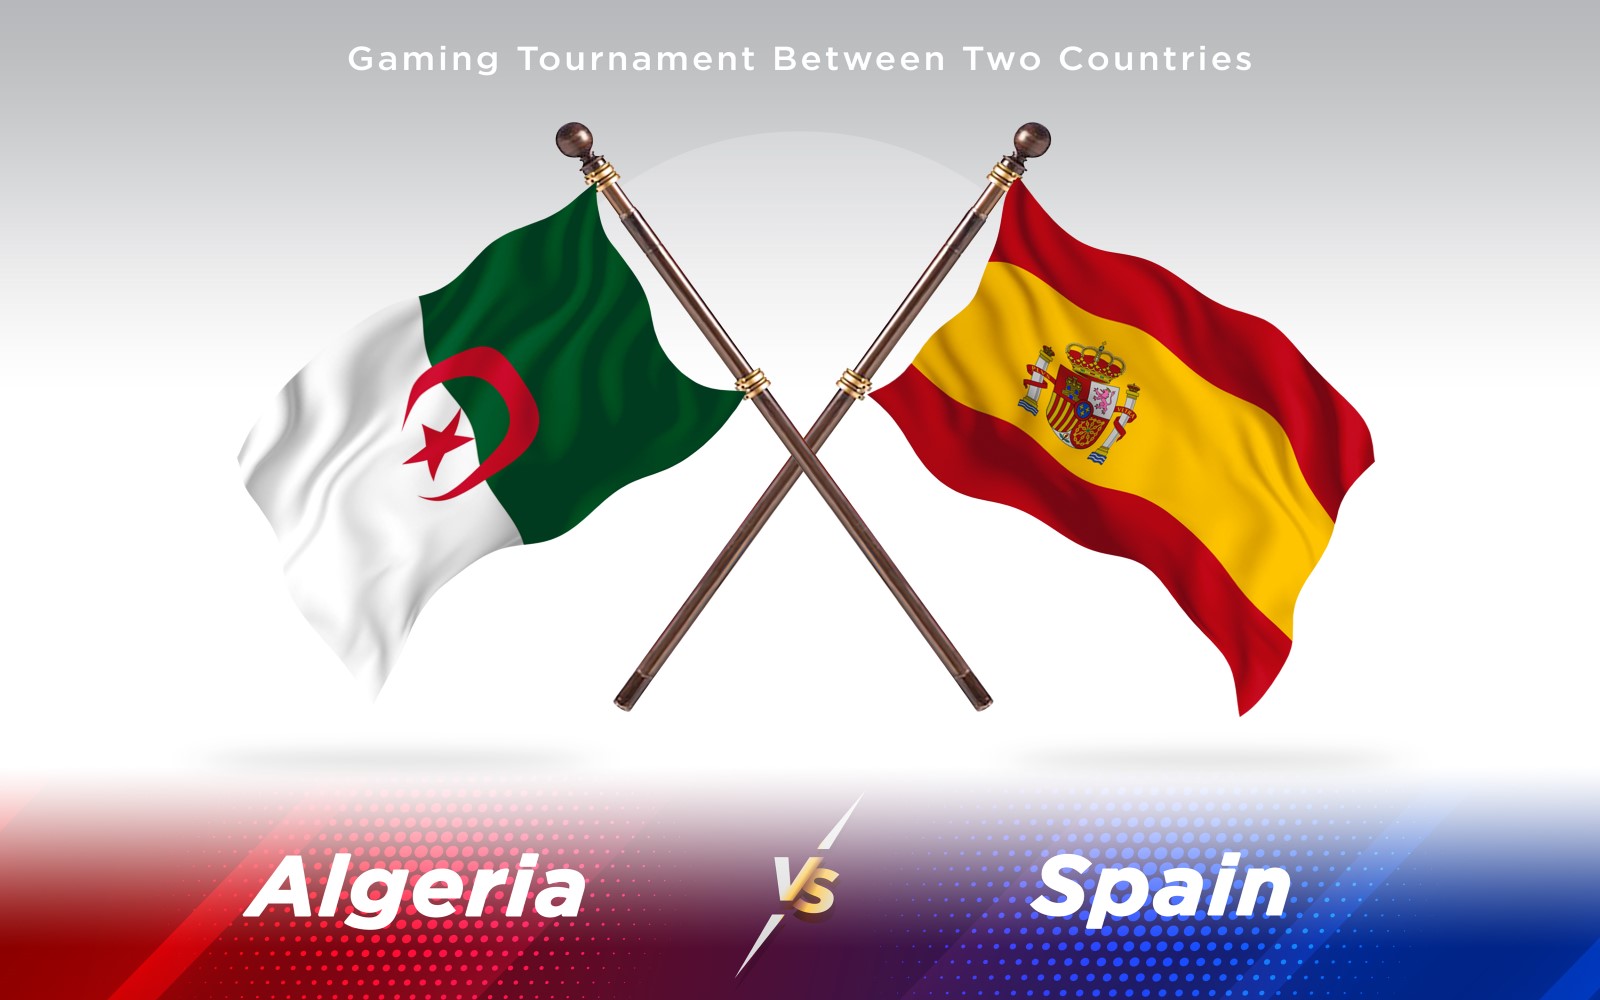 Algeria versus Spain  Two Countries Flags - Illustration